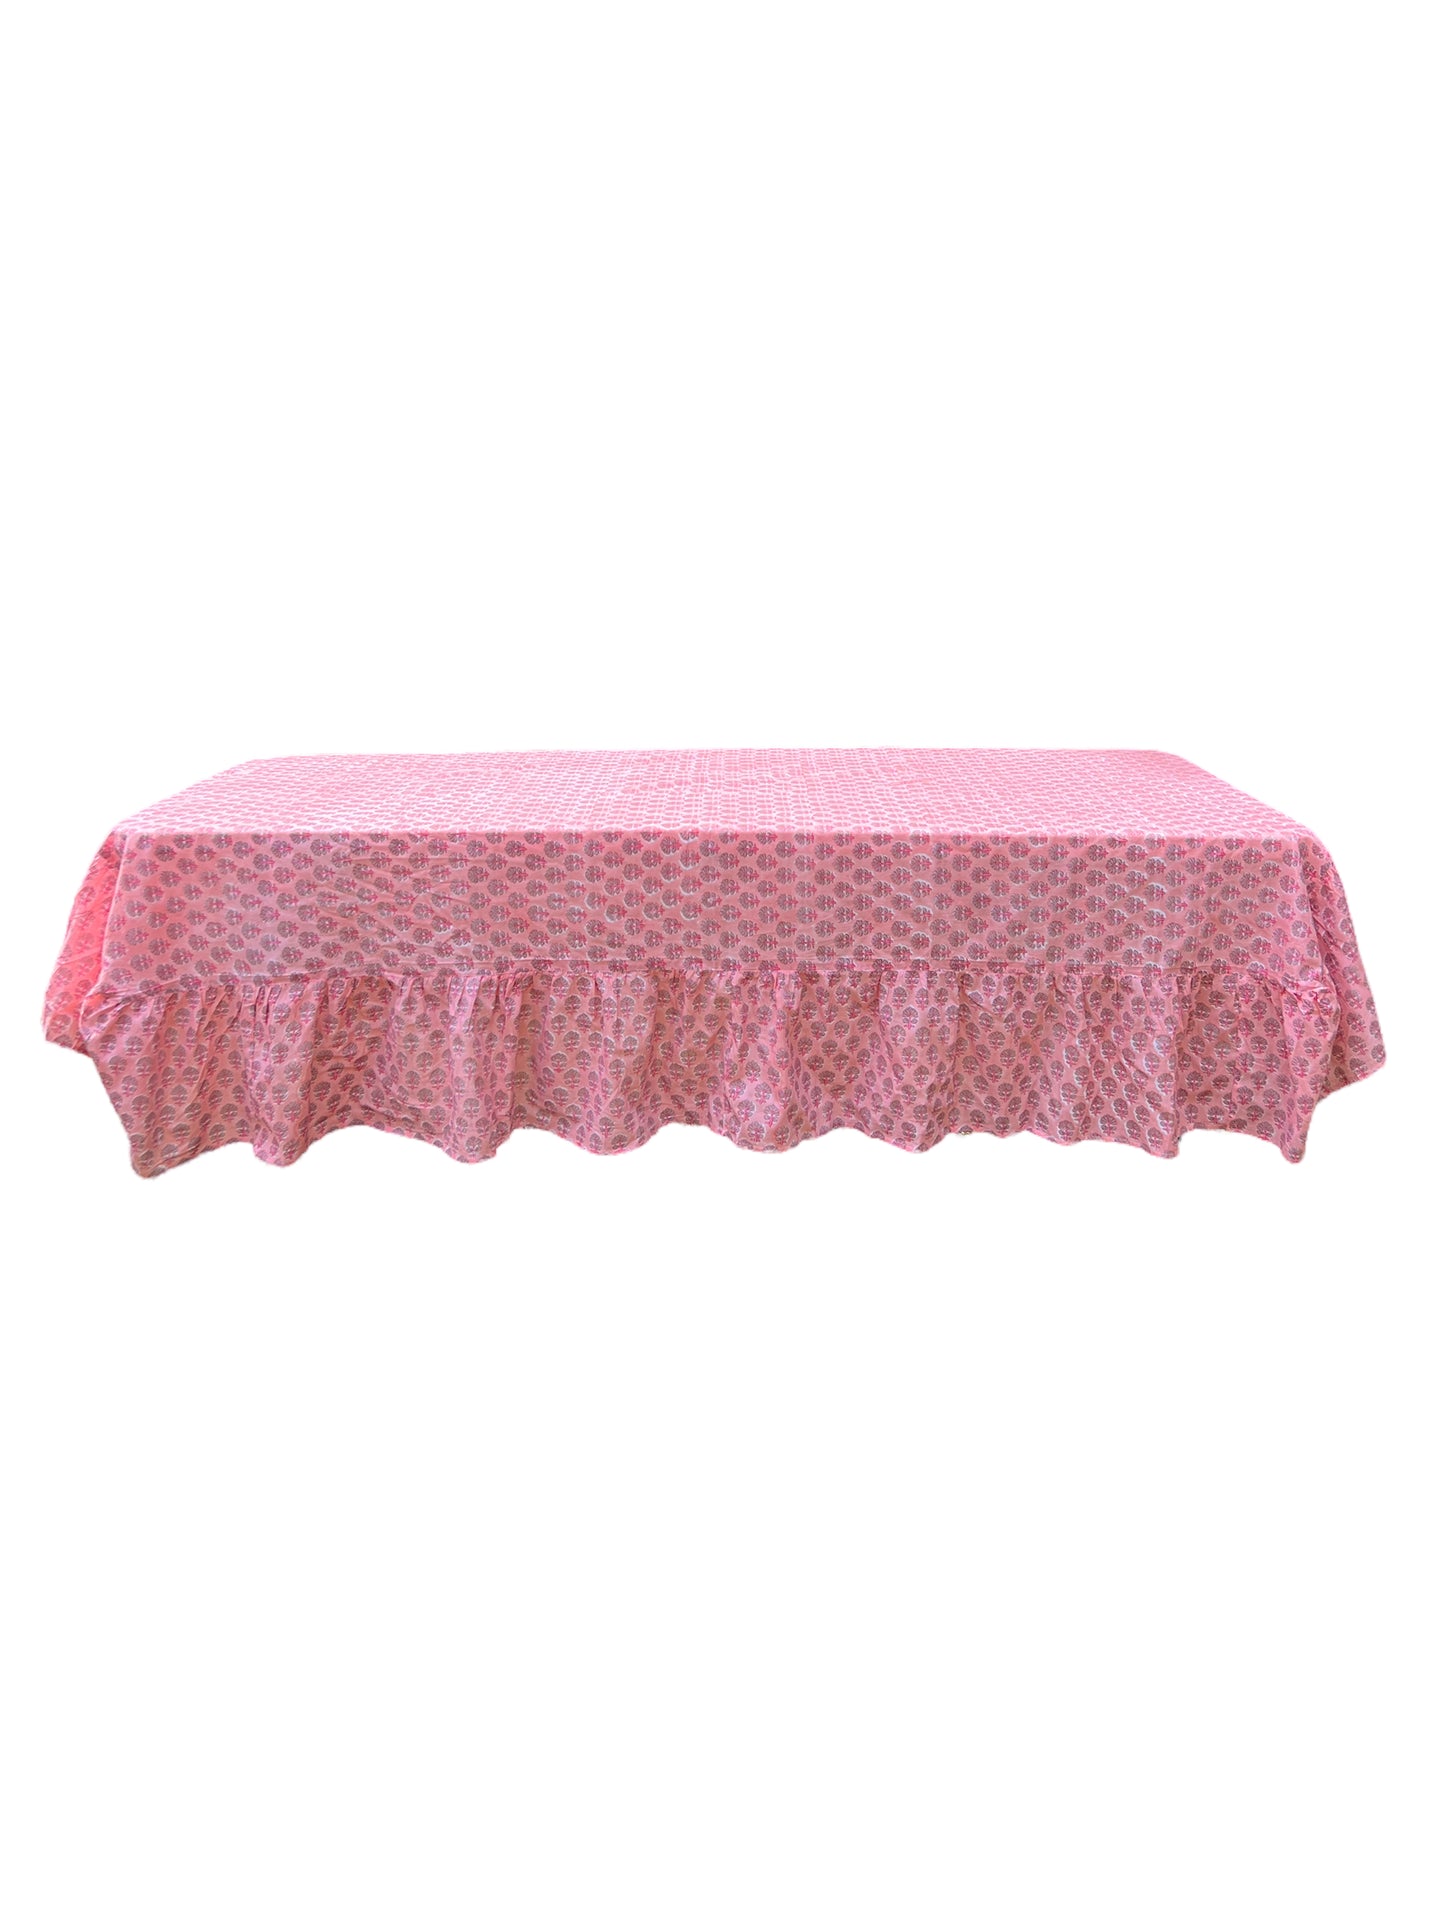 Pink Buti Ruffle Table Linens